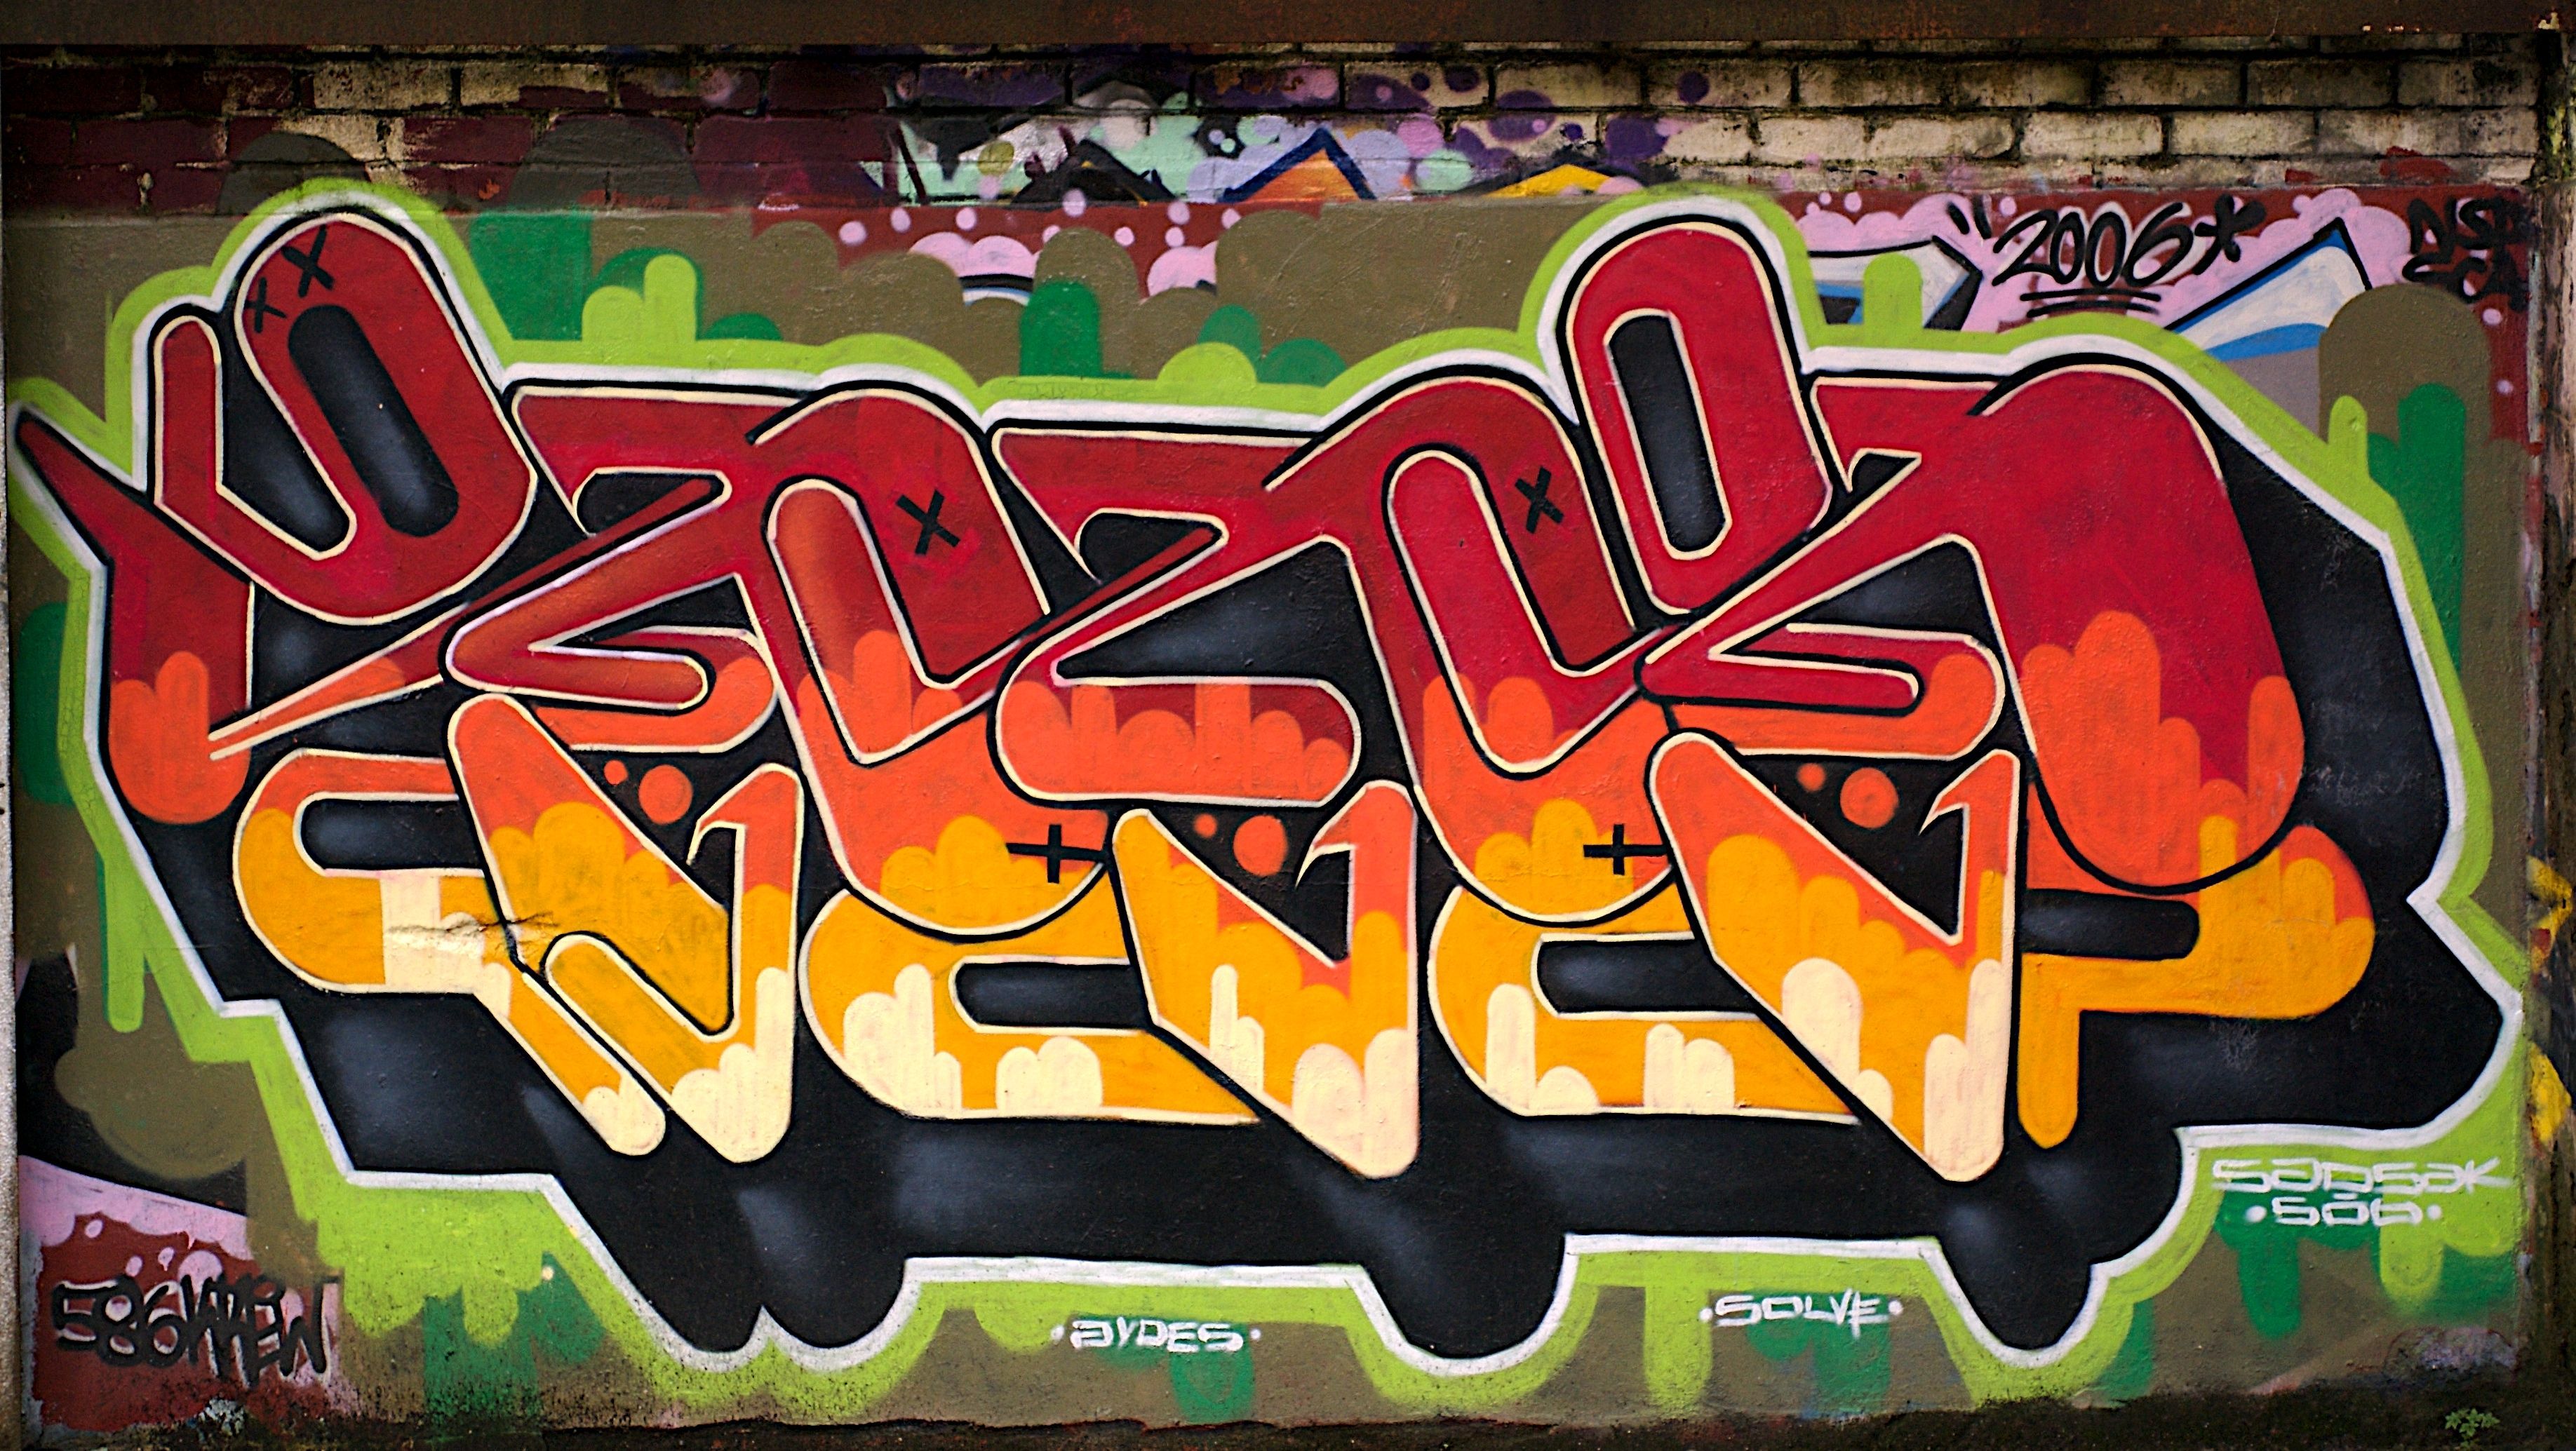 Download Free Graffiti Wallpaper Images For Laptop & Desktops